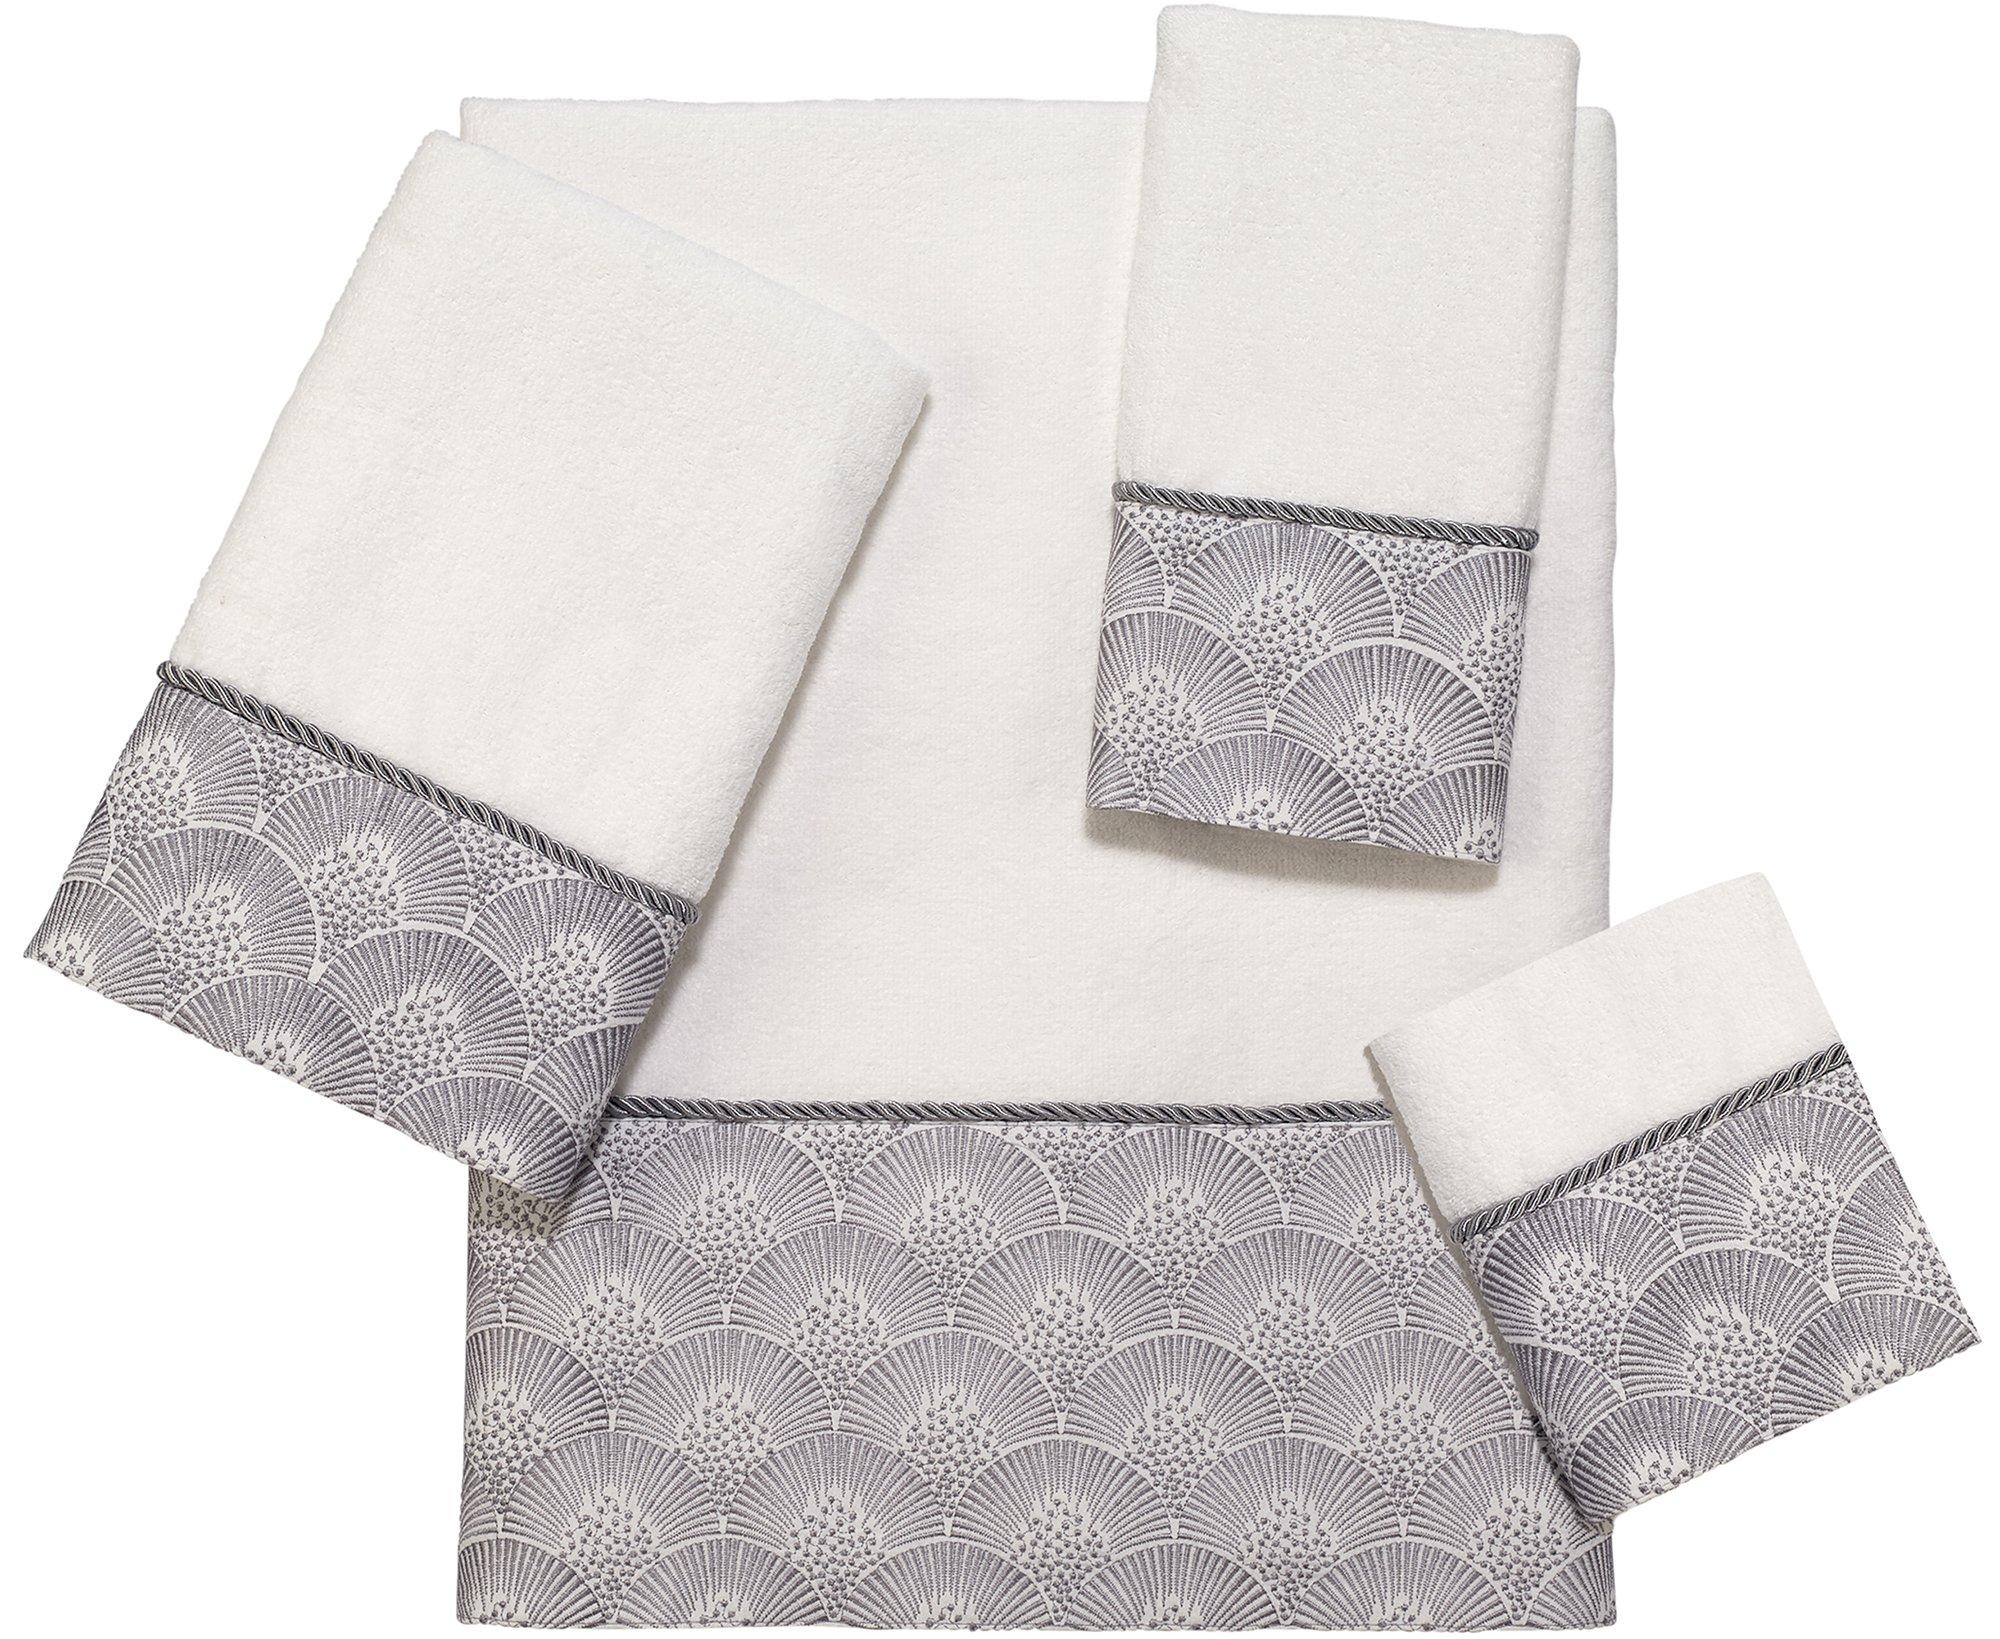 Avanti Deco Shell White Towel Collection